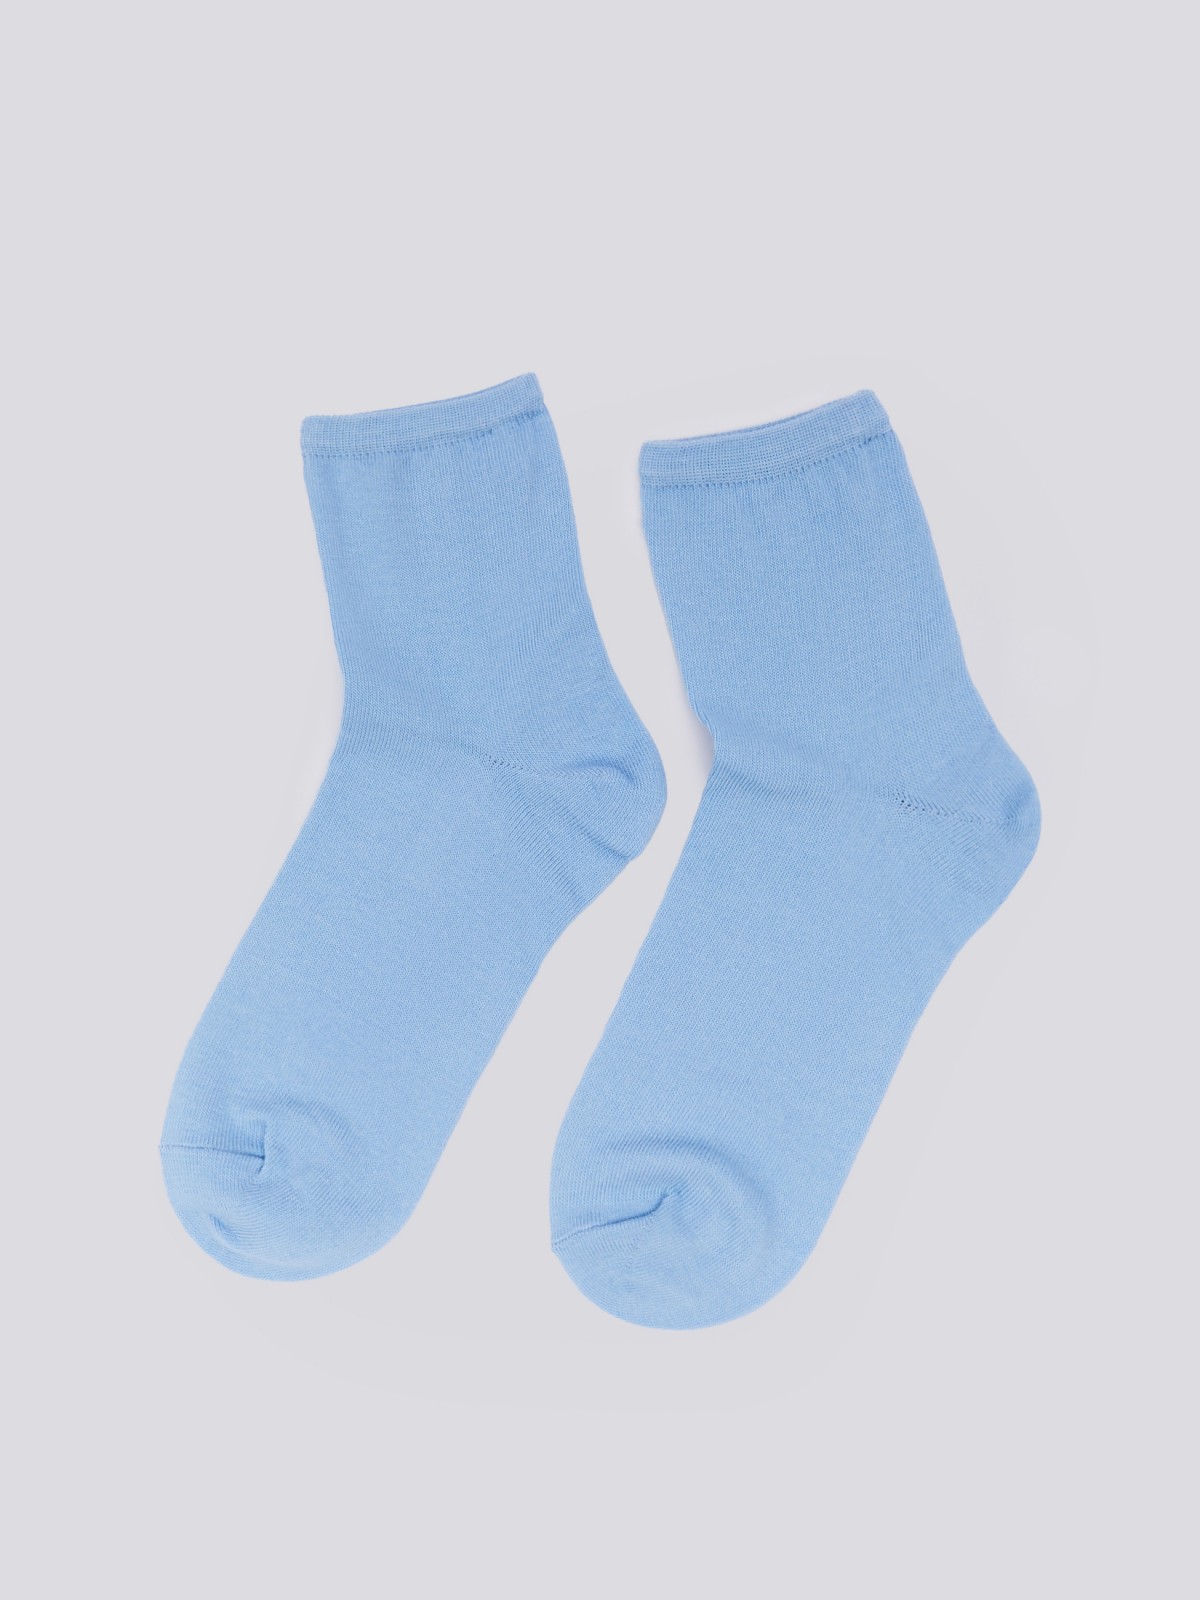 Набор носков (5 пар в комплекте) zolla 02411998J285, цвет мультицвет, размер 23-25 - фото 3